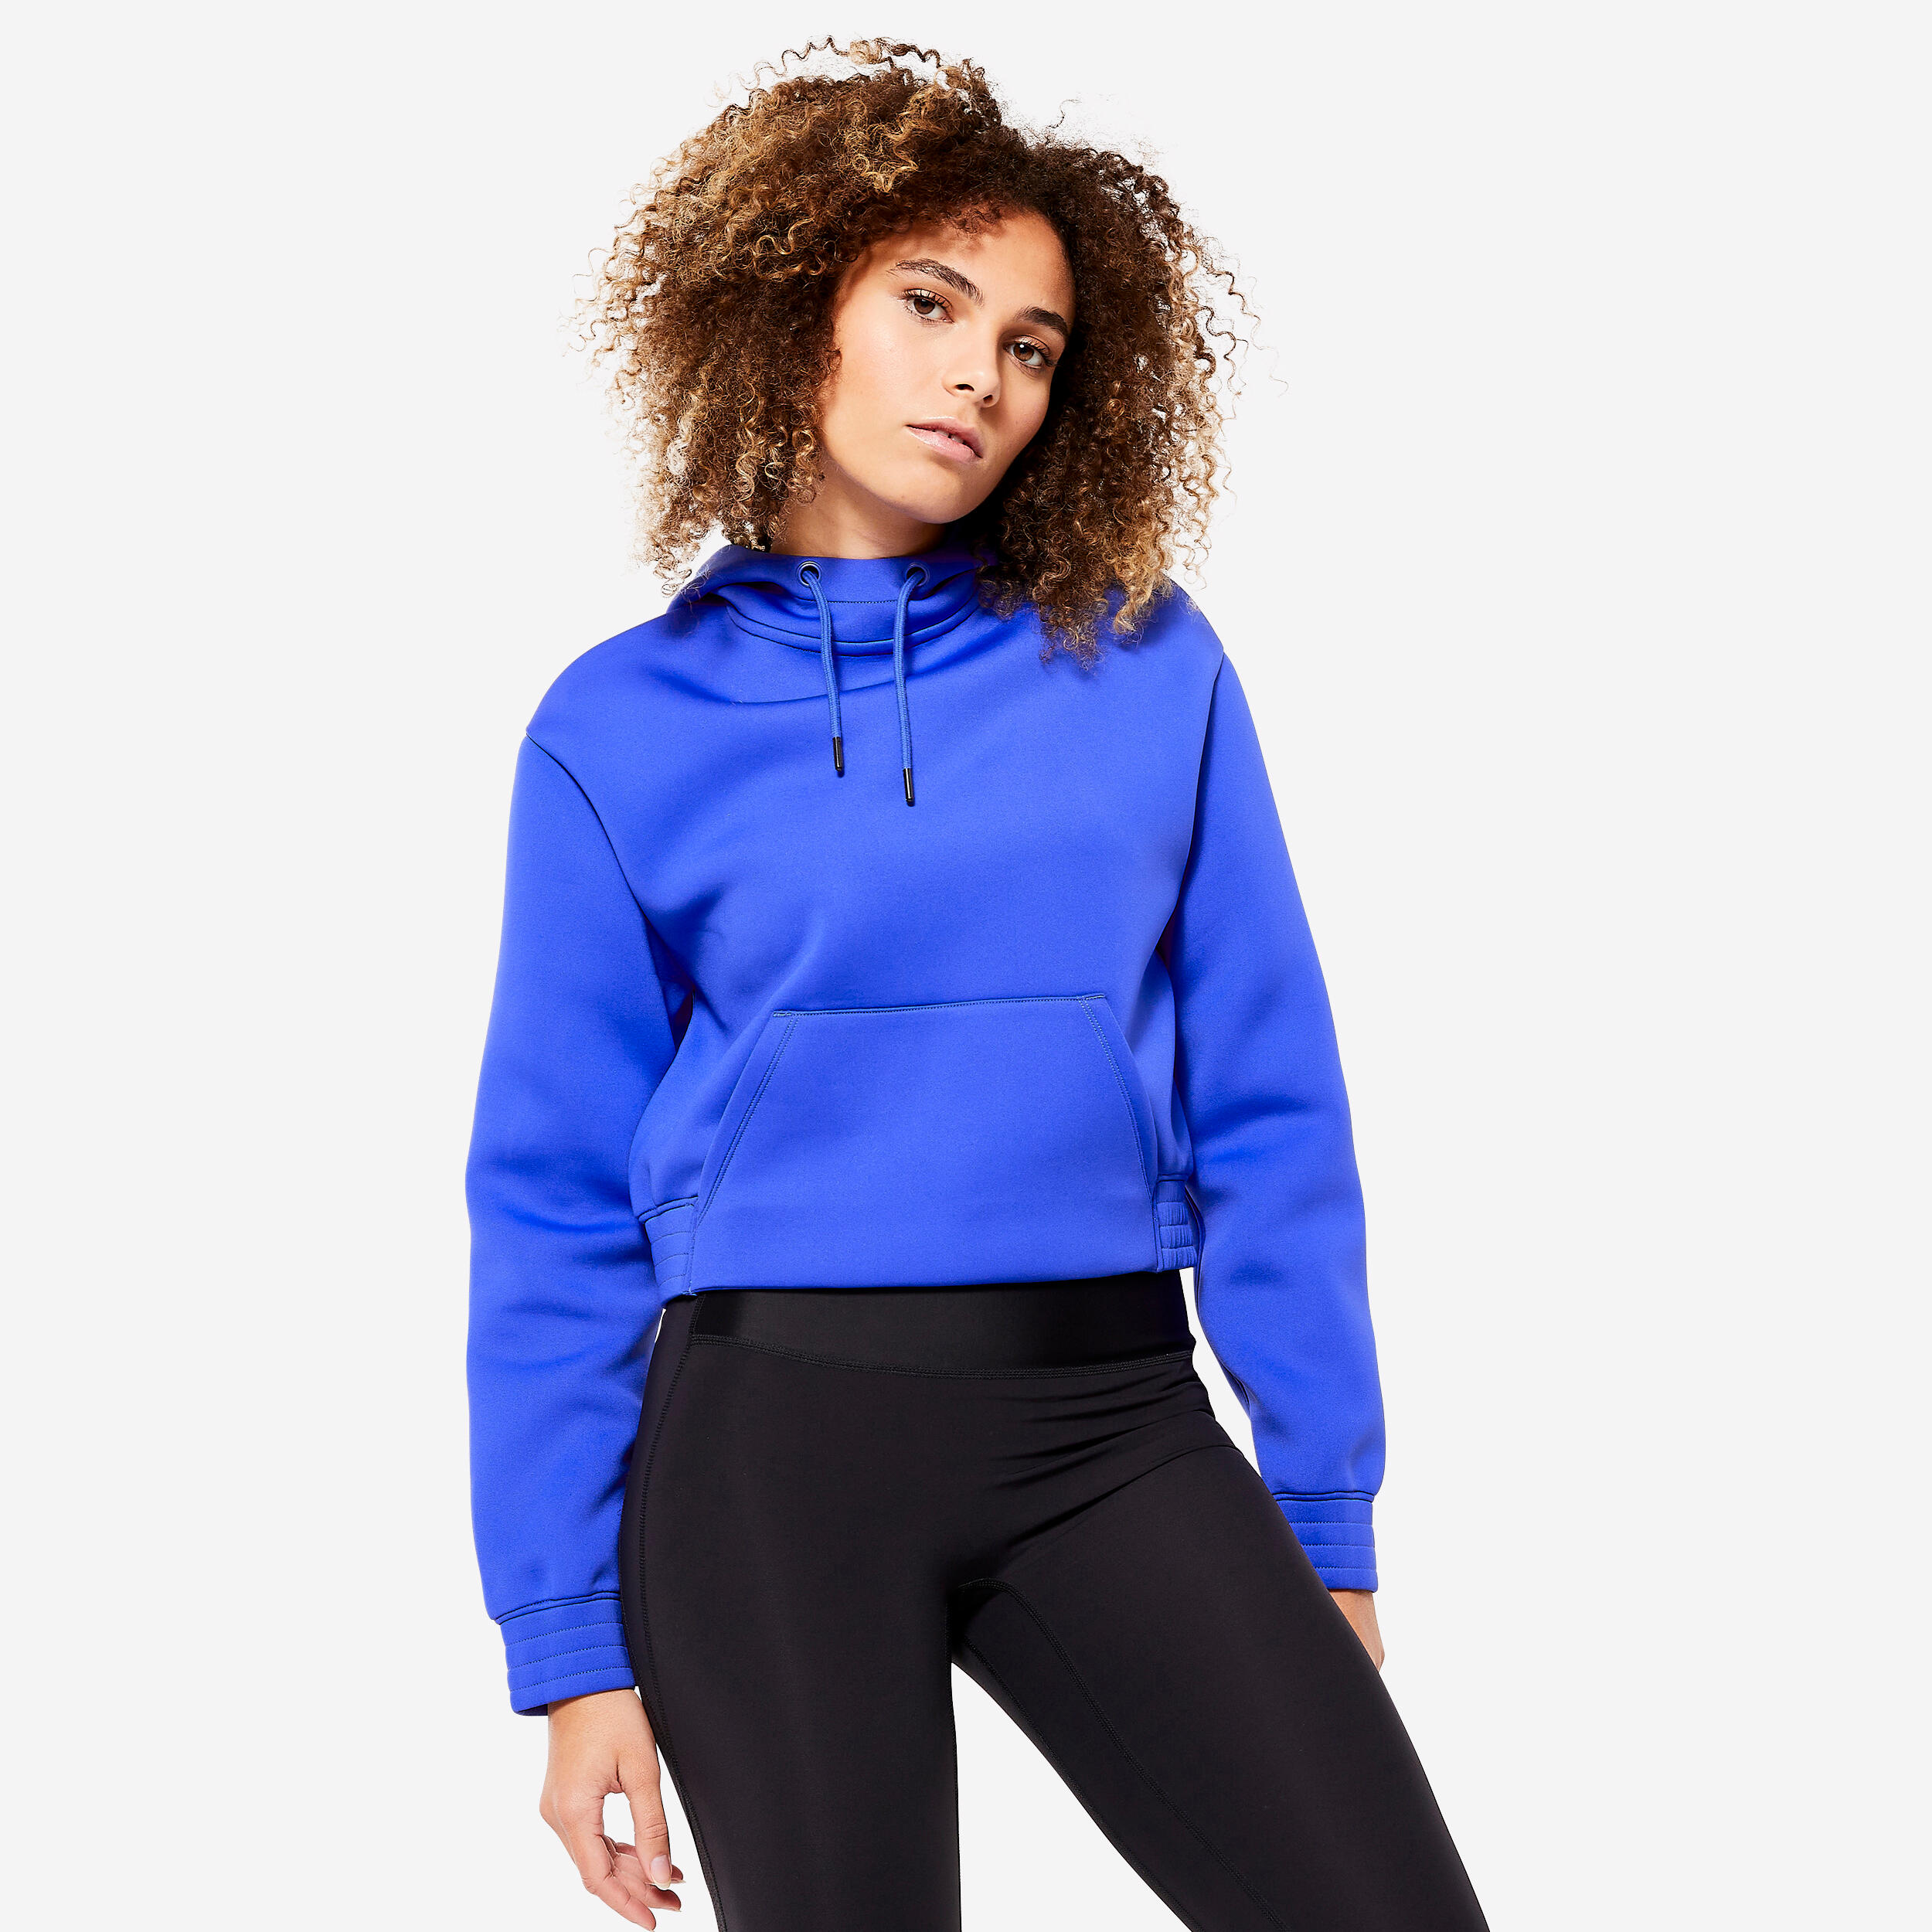 DOMYOS Cropped Cut Fitness Cardio Hooded Sweatshirt - Blue